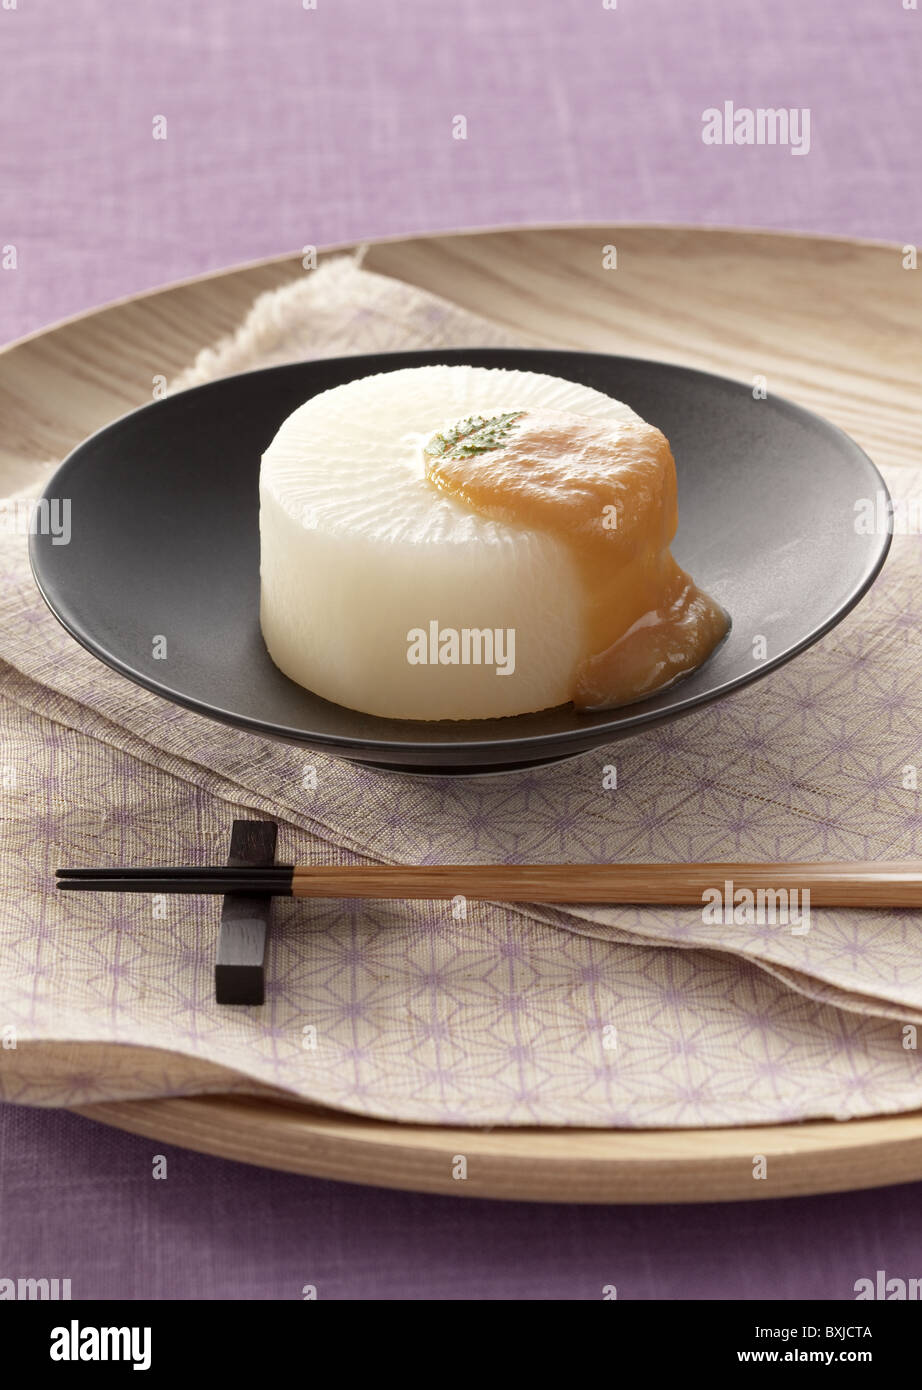 Simmered daikon radish with miso Stock Photo - Alamy